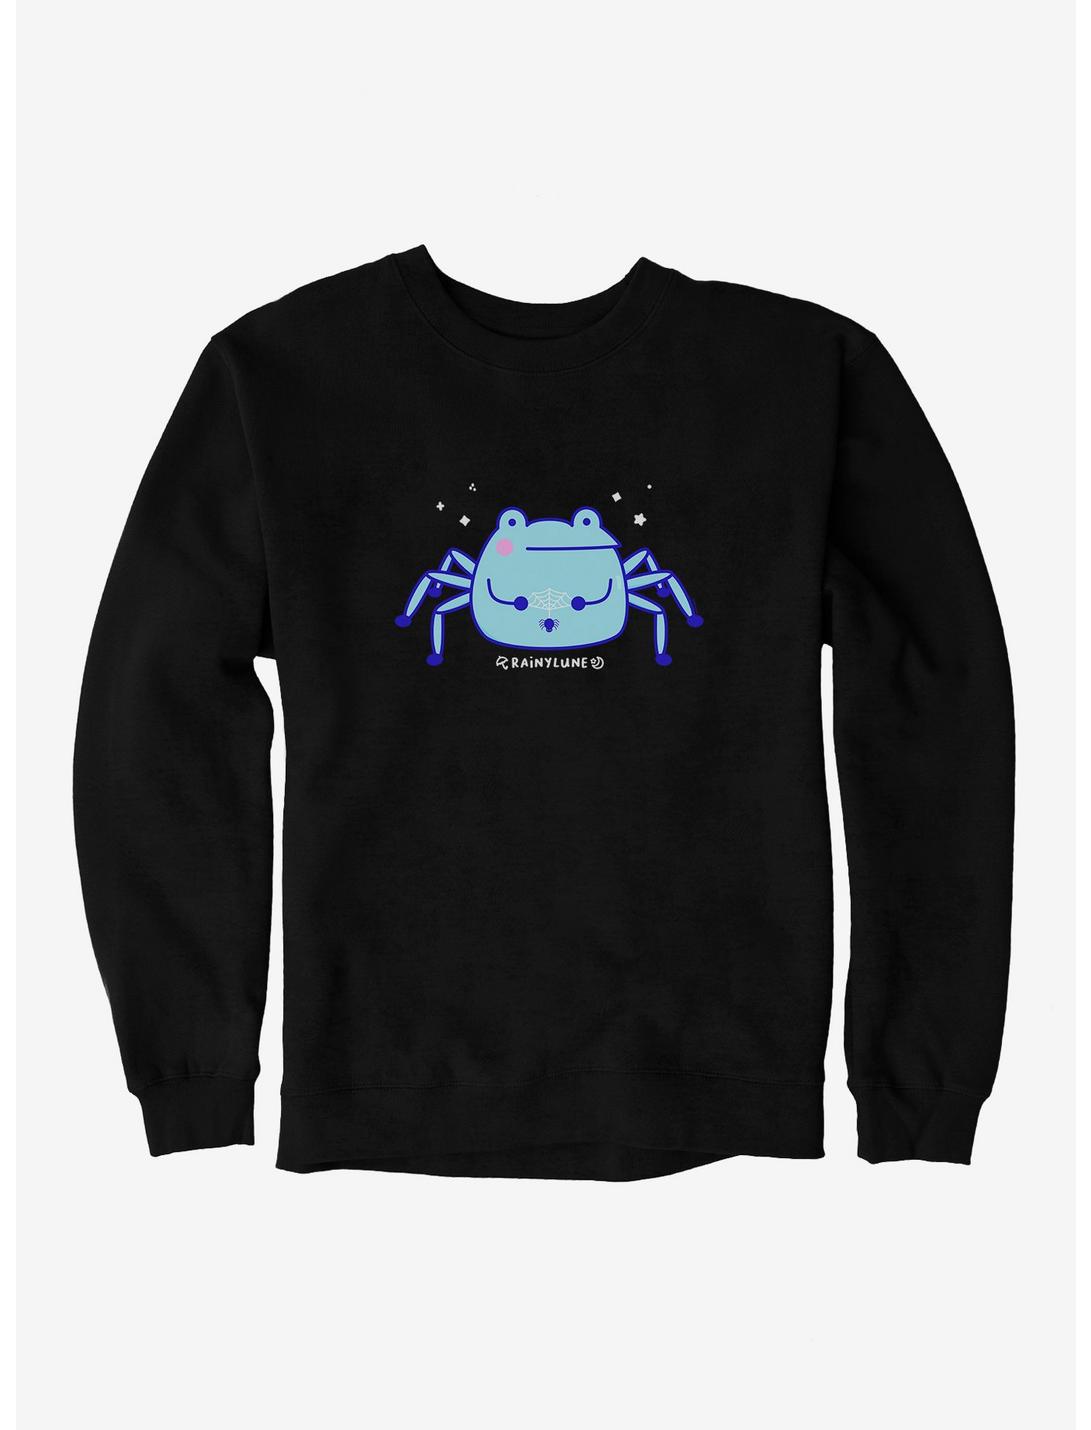 Rainylune Son Spider Sweatshirt, BLACK, hi-res